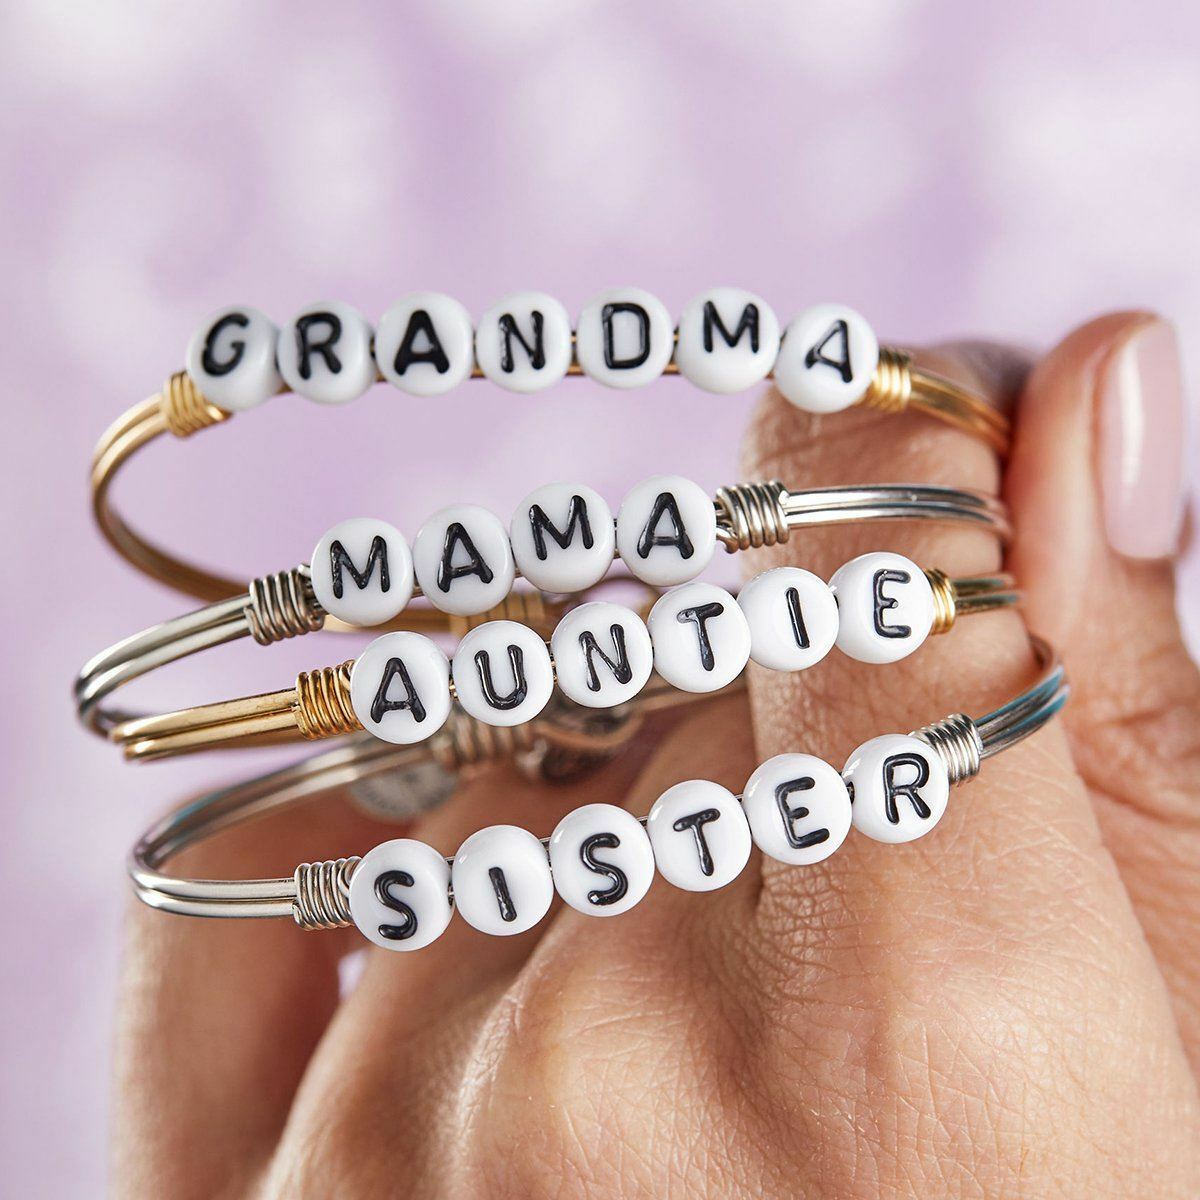 Luca + Danni Mama Letter Bead Bangle Bracelet, Women's, Size: Regular, Silver